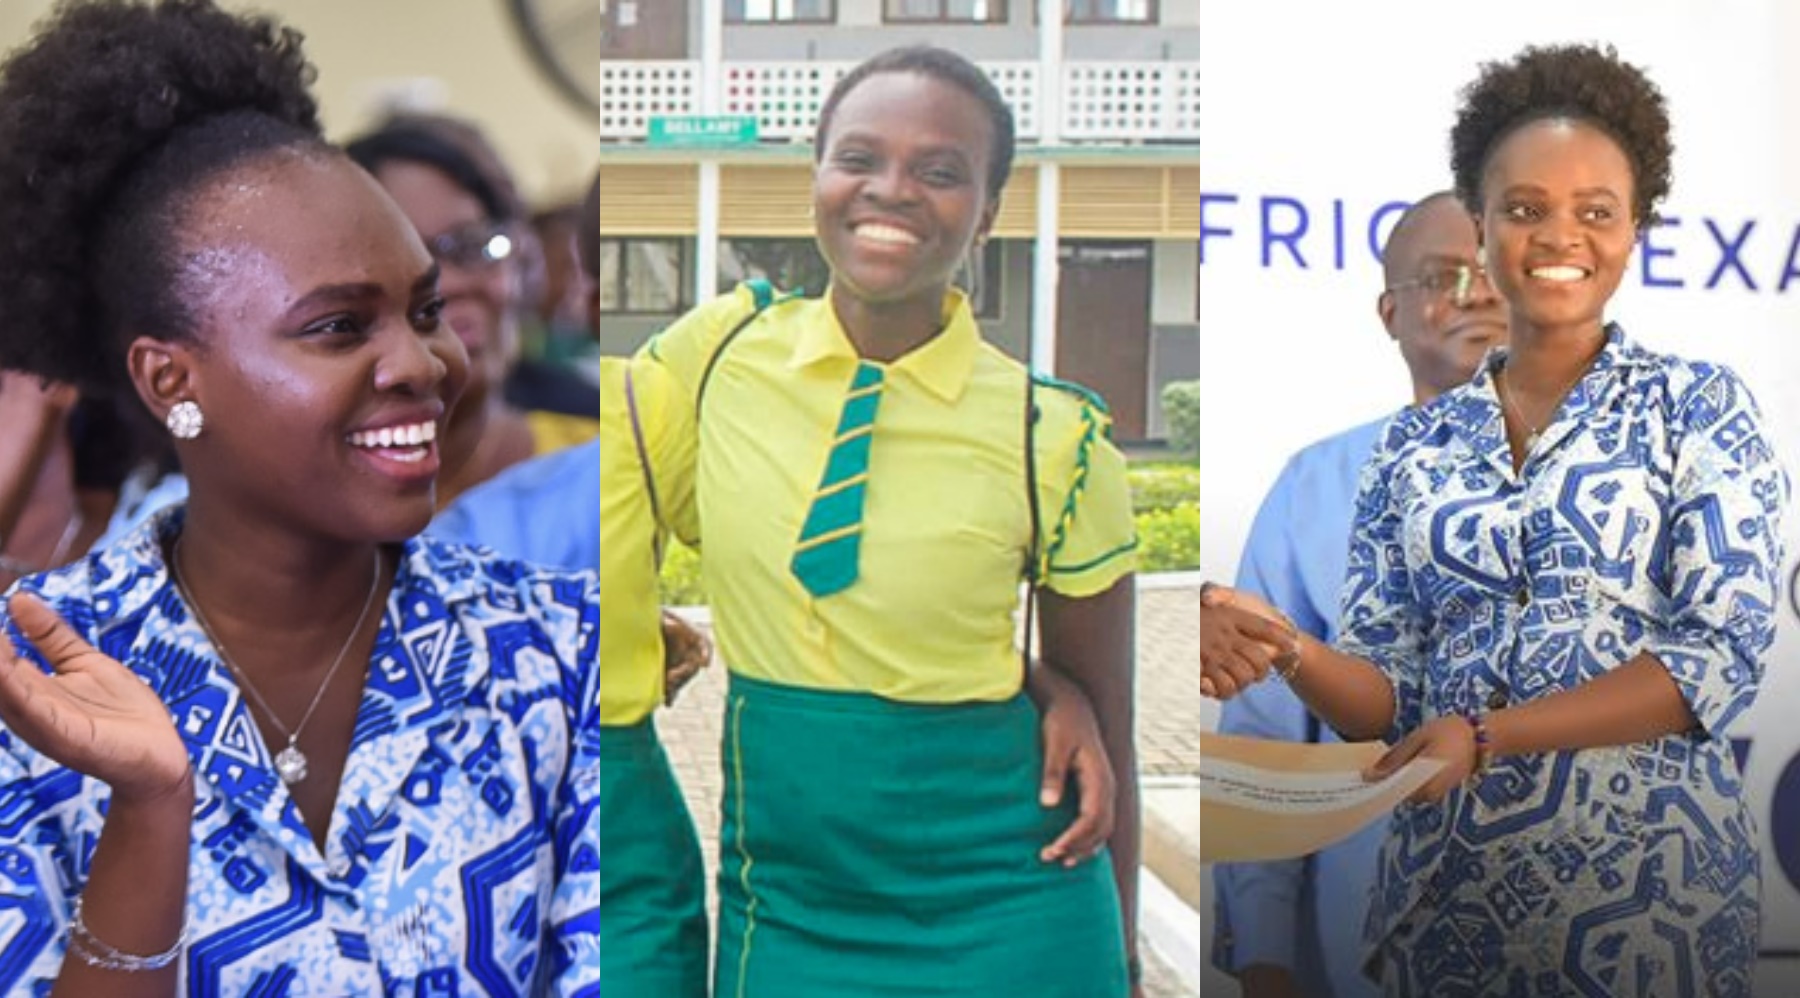 Nana Adwoa Sereboo: First-year student at Ashesi named among top 3 in Ghana by WAEC